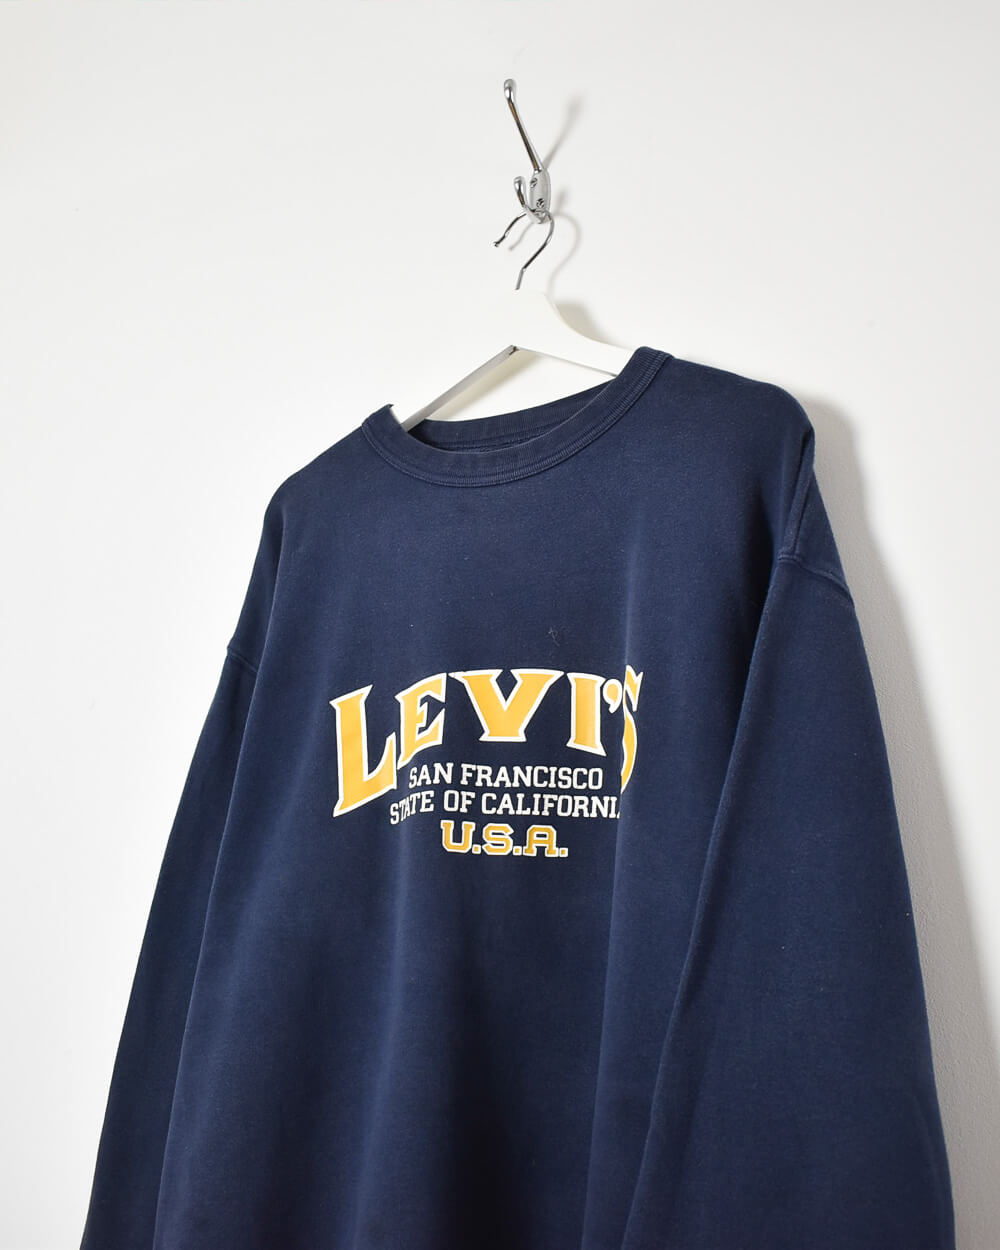 Levi's San Francisco State of California USA Sweatshirt - X-Large - Domno Vintage 90s, 80s, 00s Retro and Vintage Clothing 